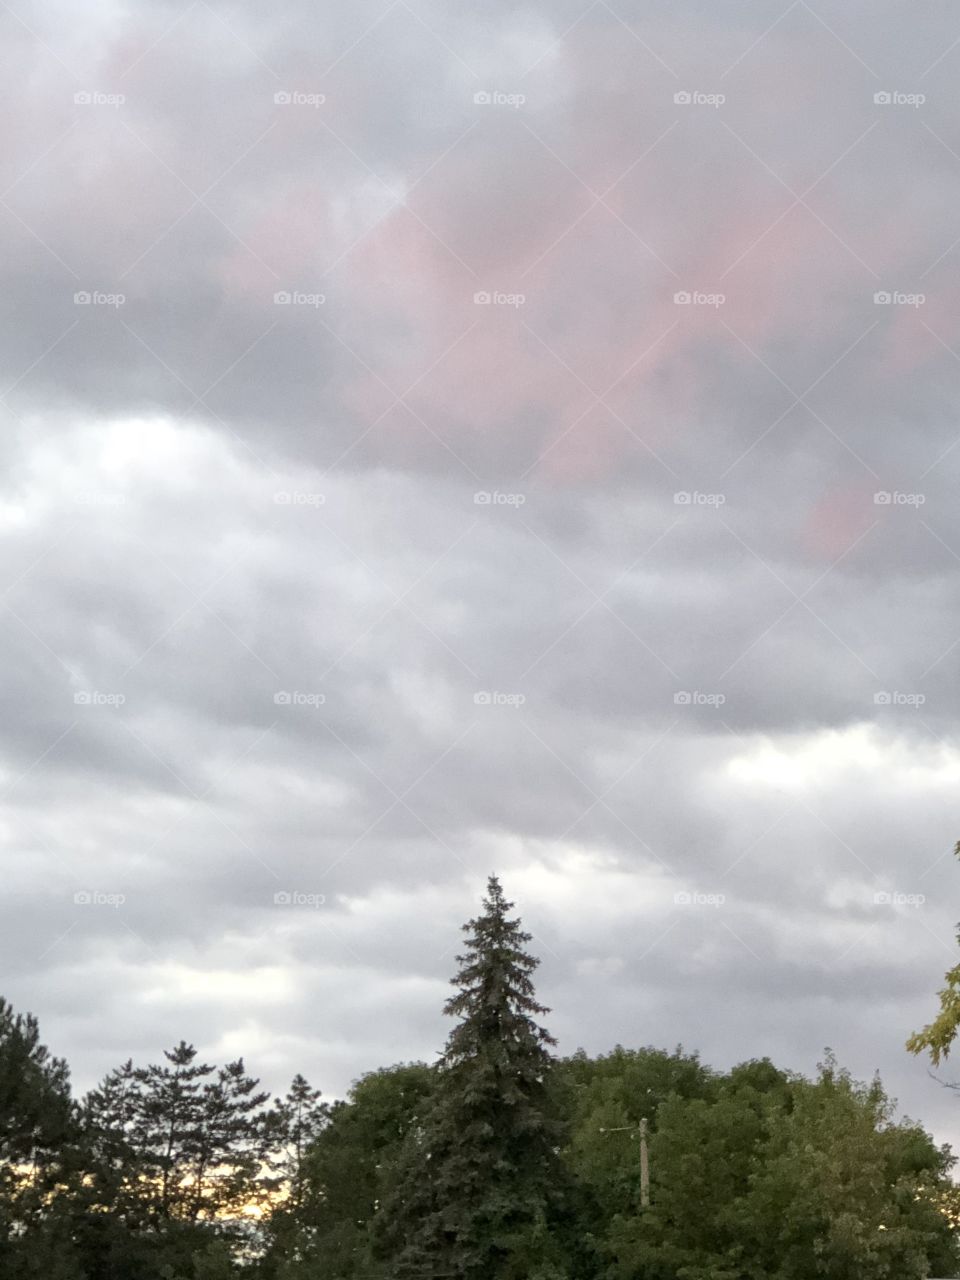 Pink clouds + pine 🌲